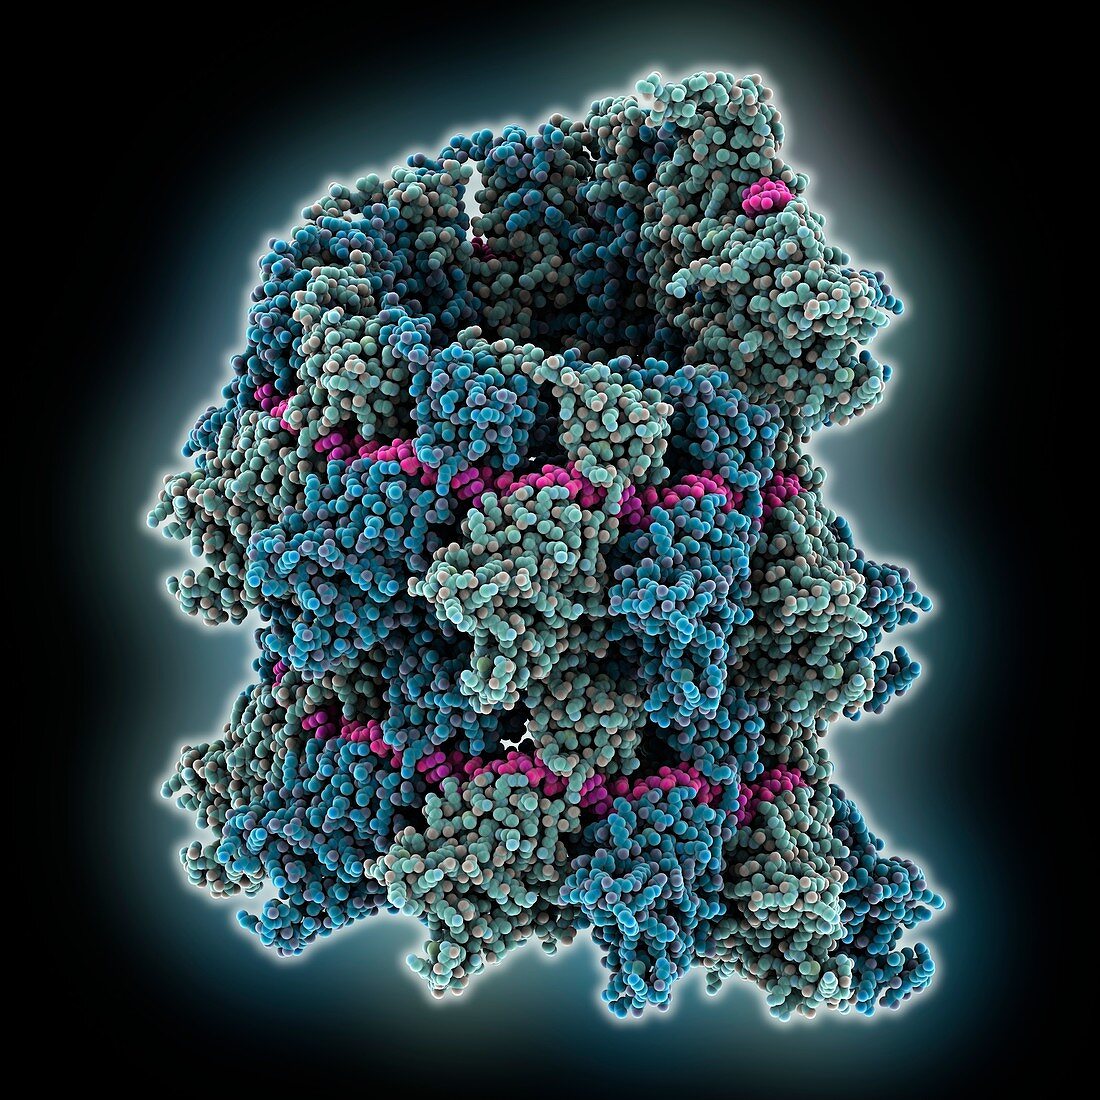 Virus nucleoprotein RNA nucleocapsid